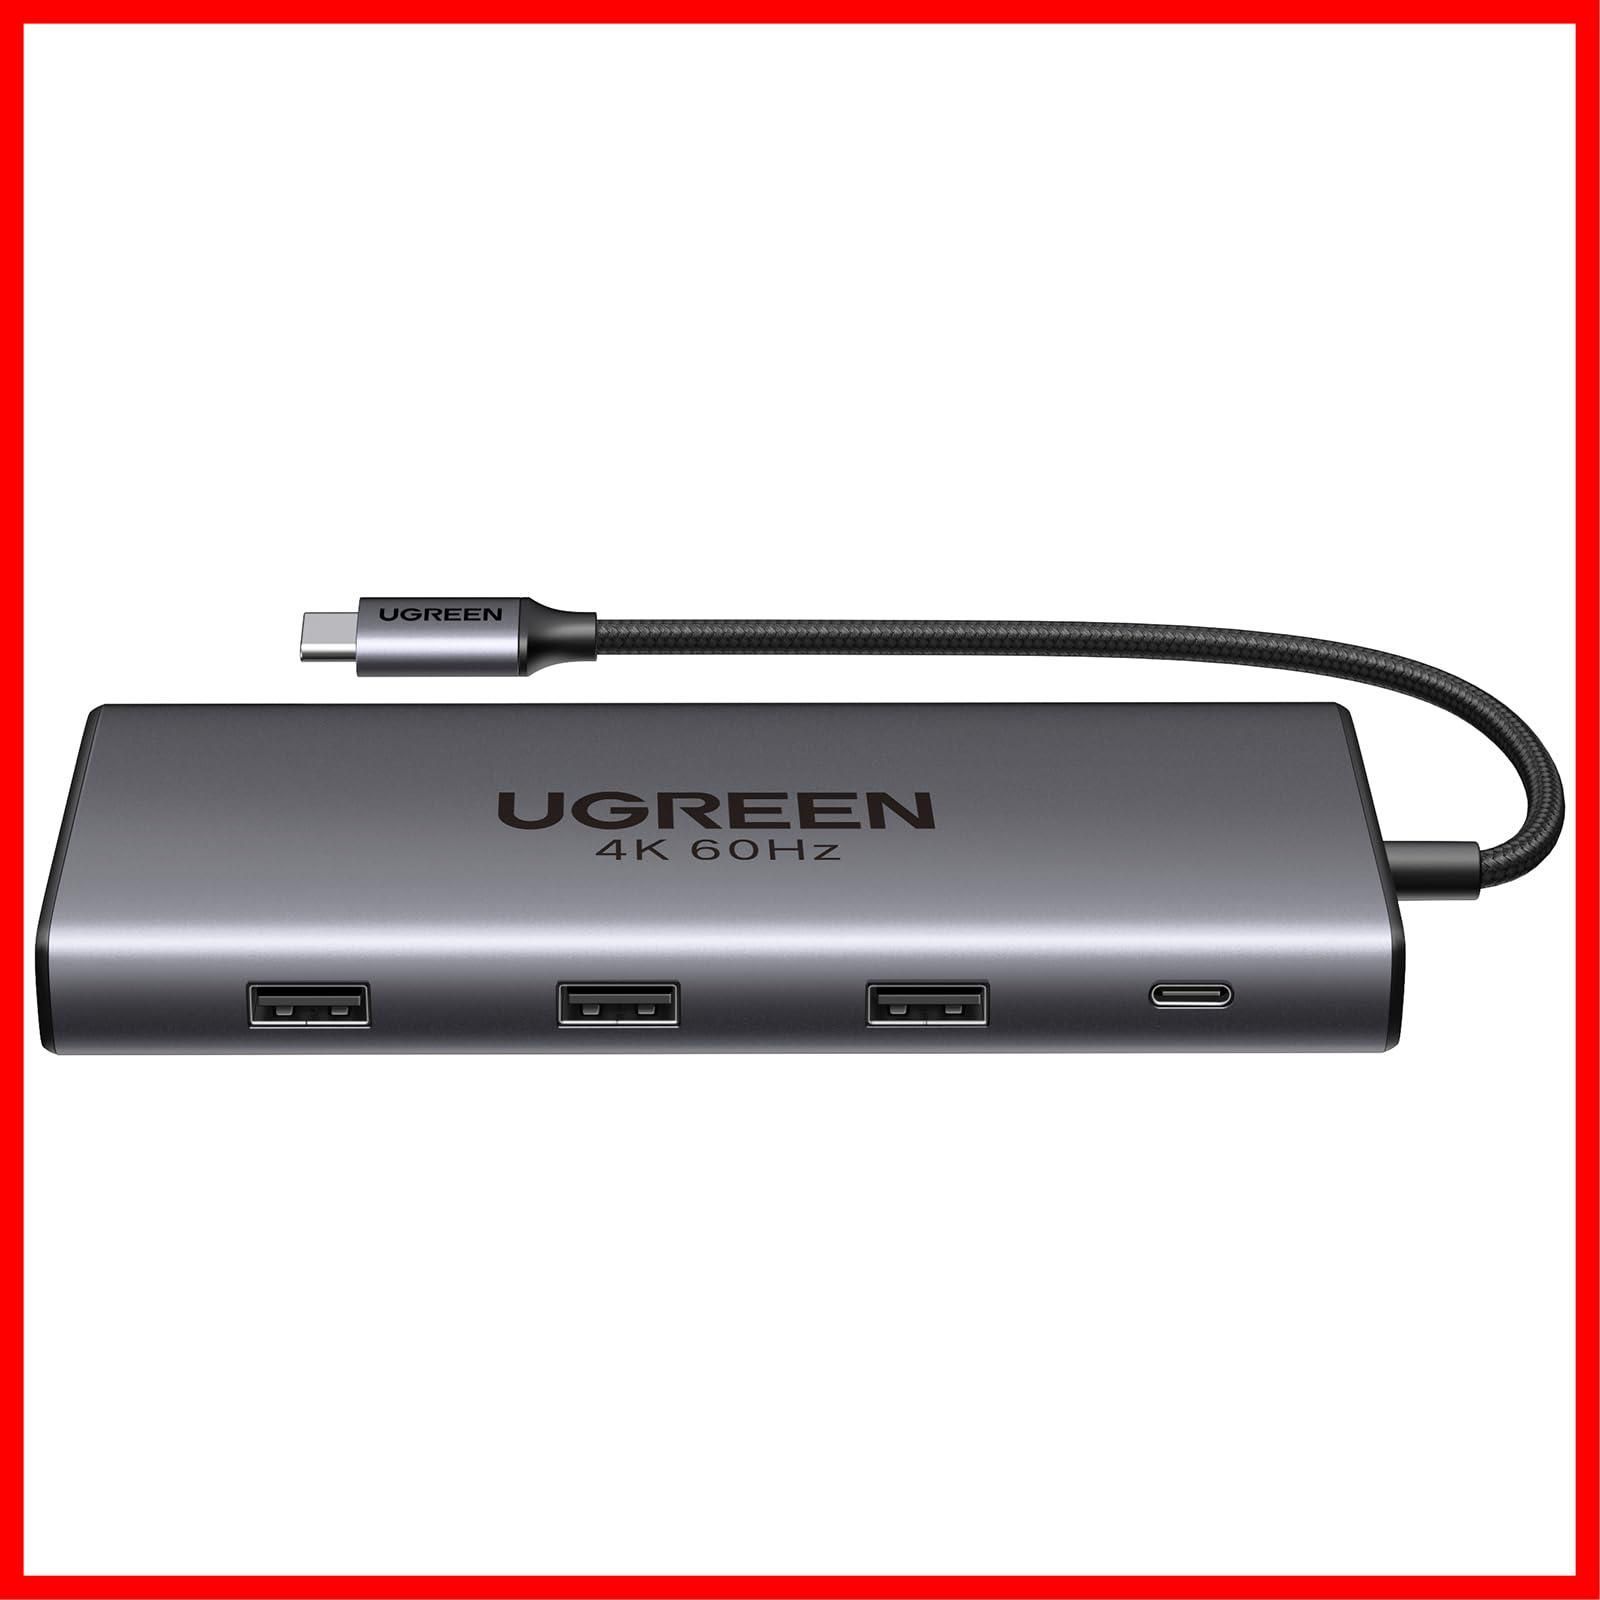 UGREEN Revodok Pro 9 in 1 USB Cハブ 10Gbps